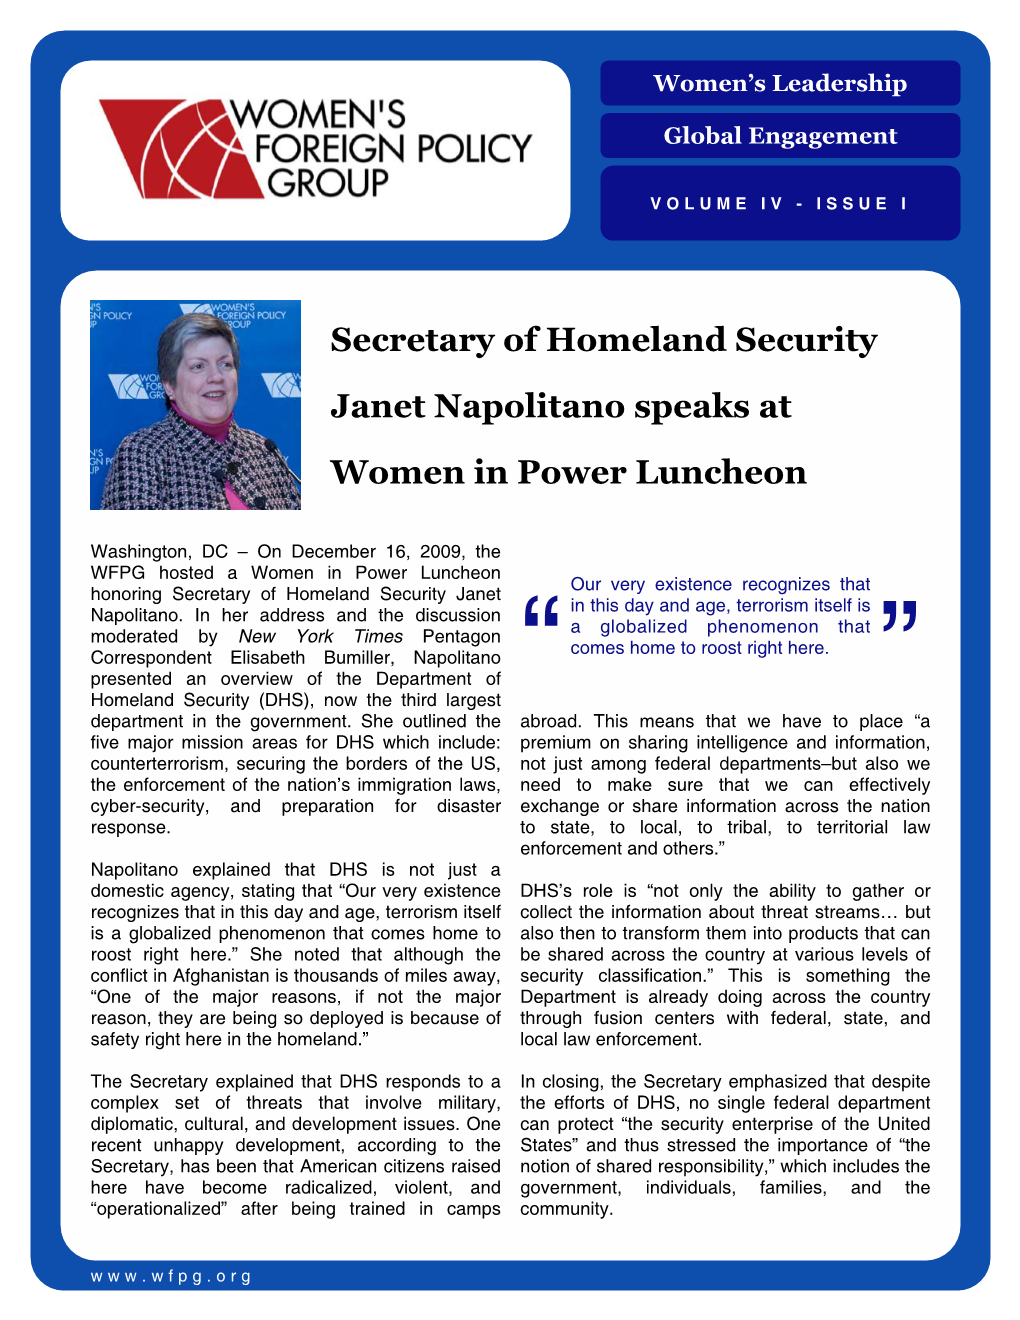 Secretary of Homeland Security Janet Napolitano Speaks at Women In